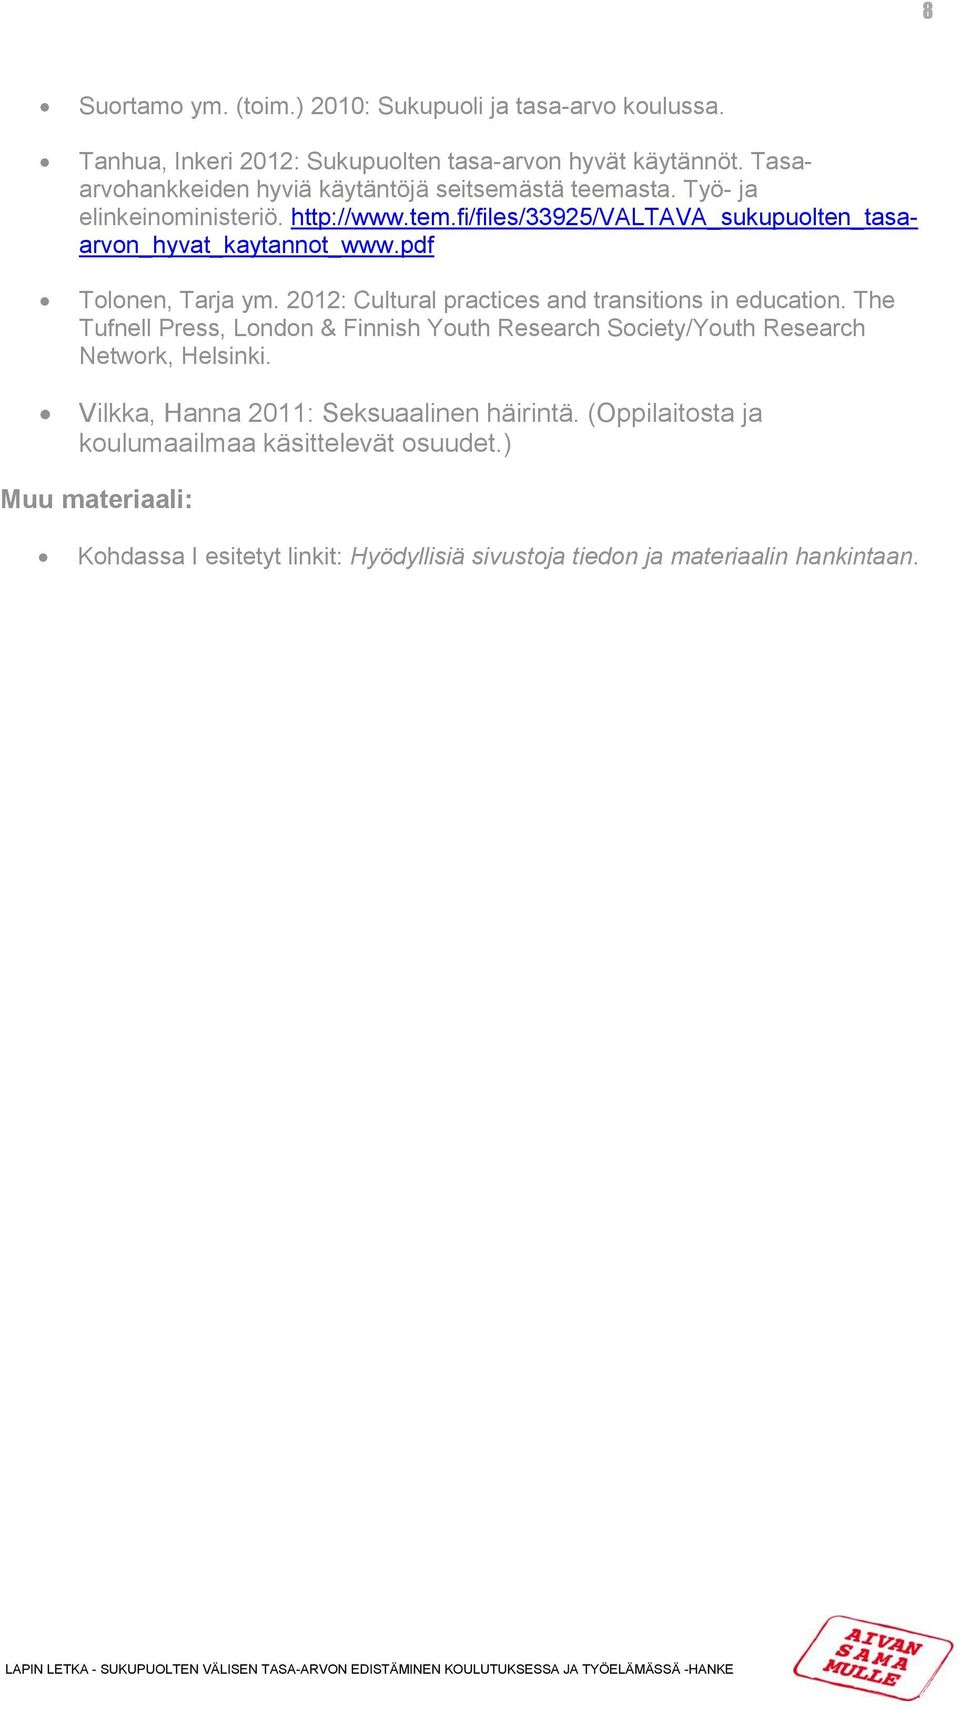 fi/files/33925/valtava_sukupuolten_tasaarvon_hyvat_kaytannot_www.pdf Tolonen, Tarja ym. 2012: Cultural practices and transitions in education.